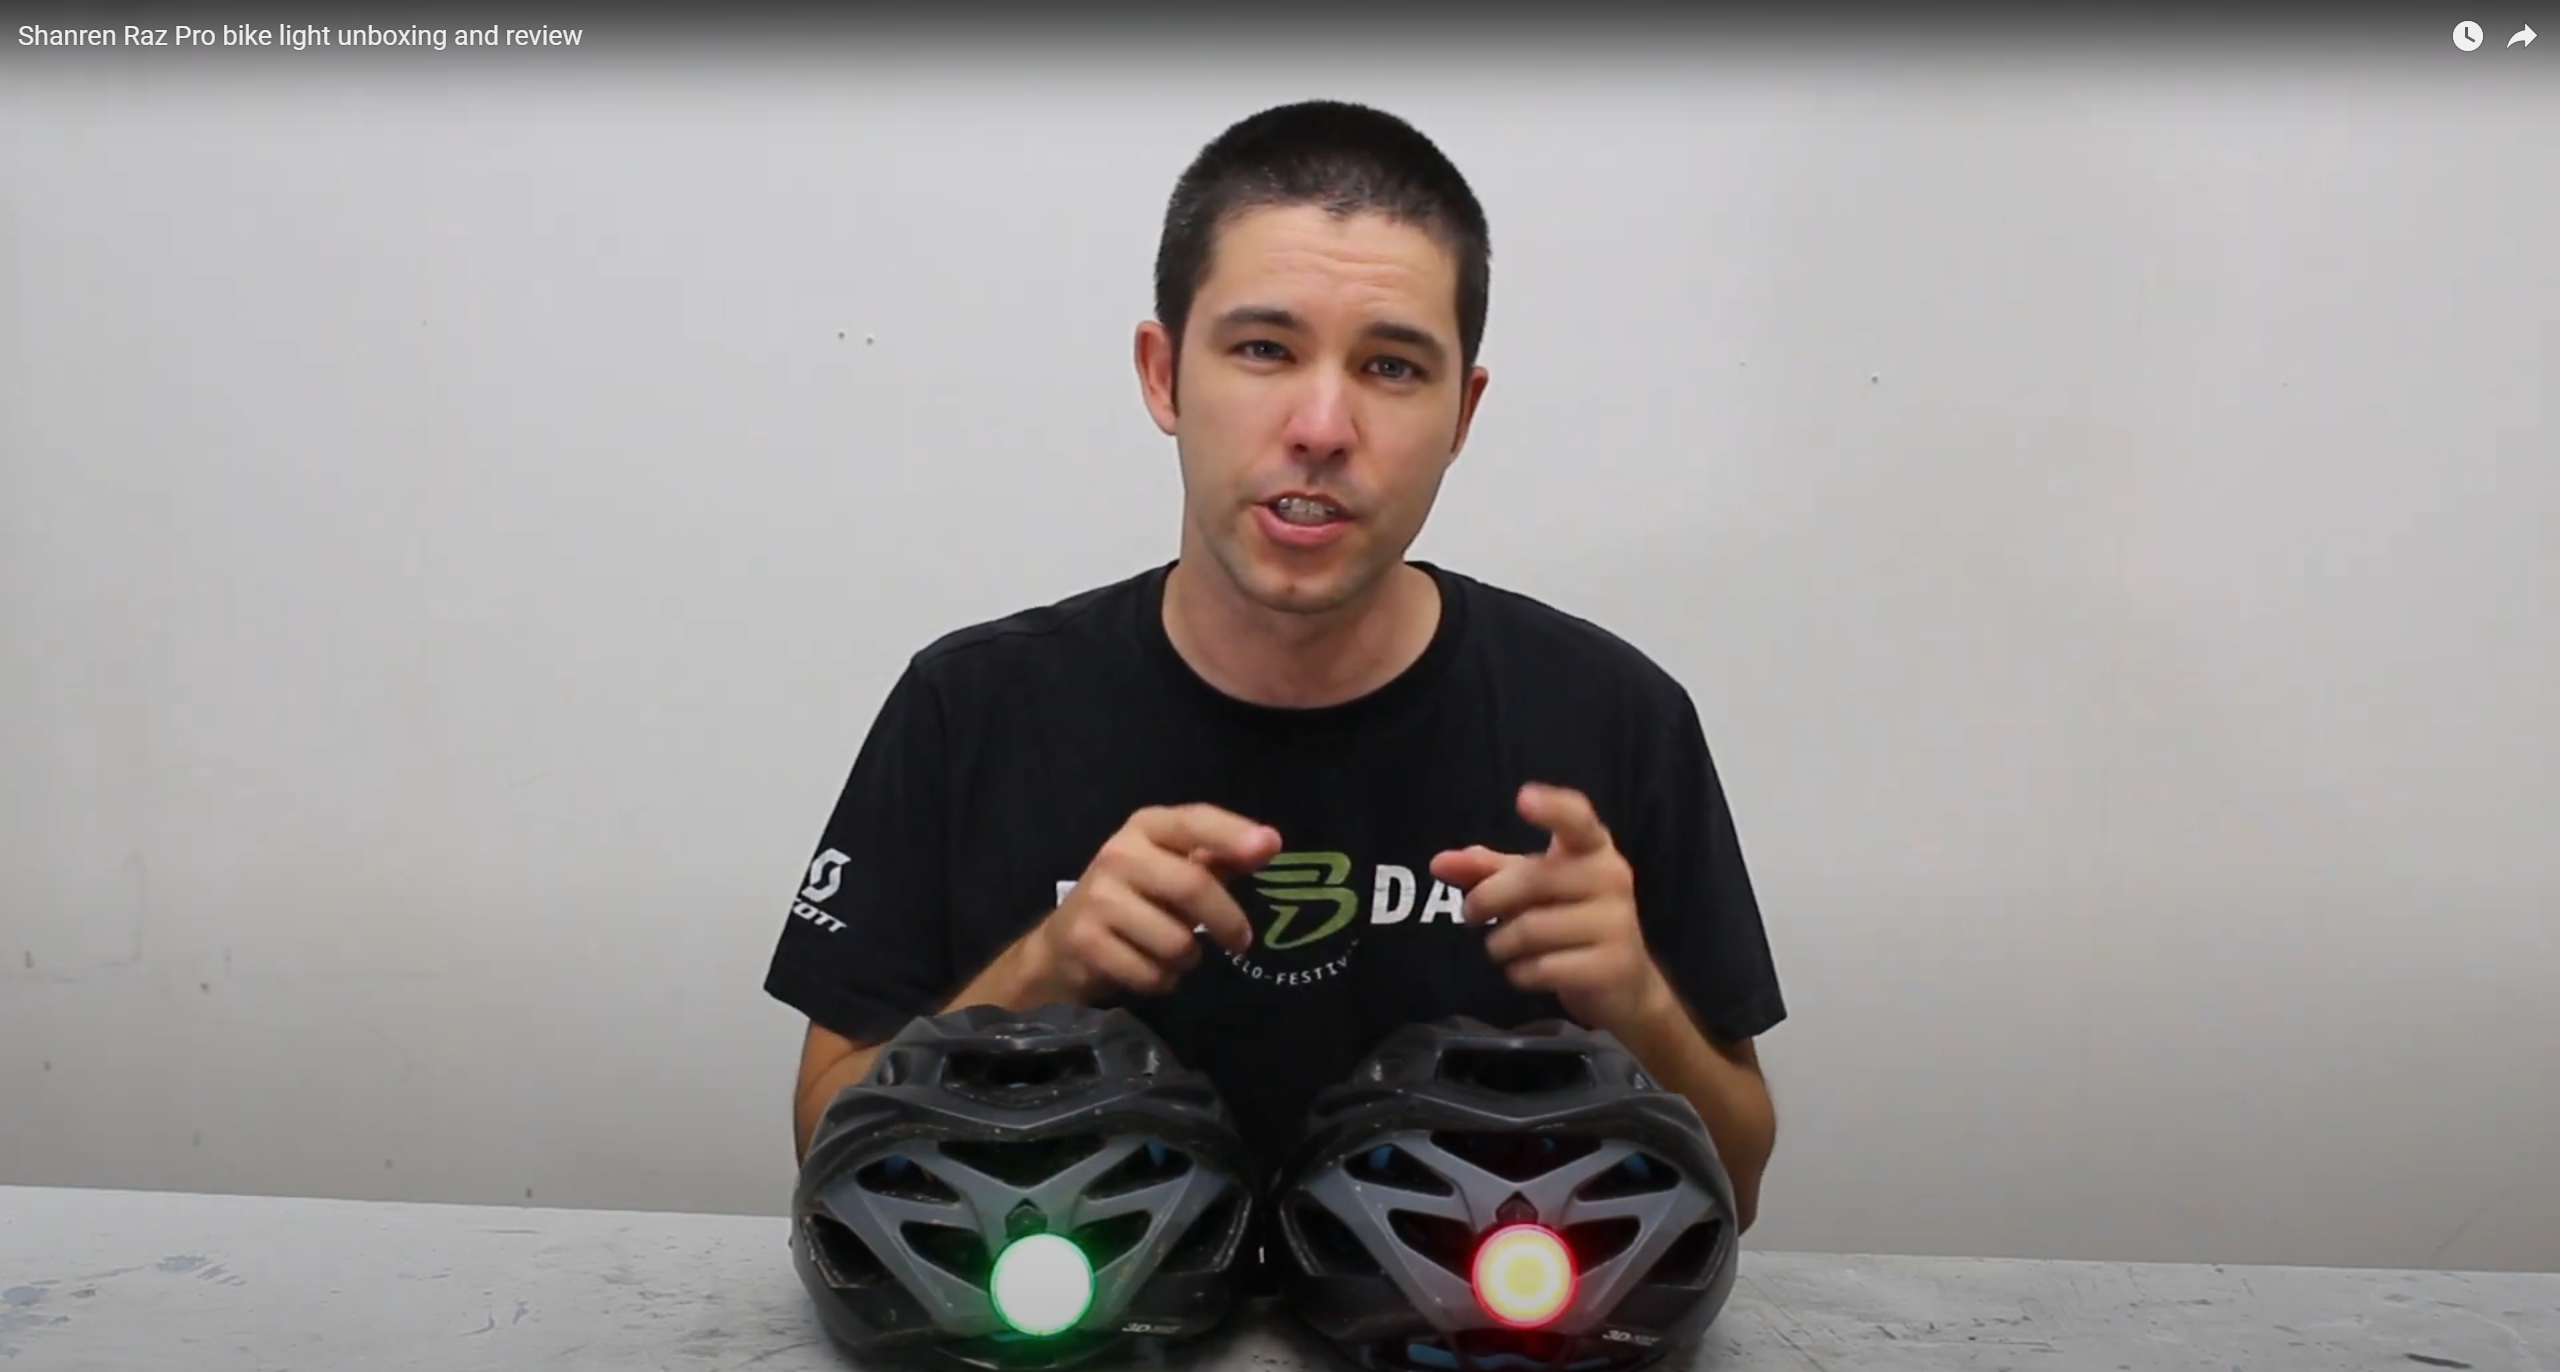 Shanren Raz Pro bike light unboxing and review